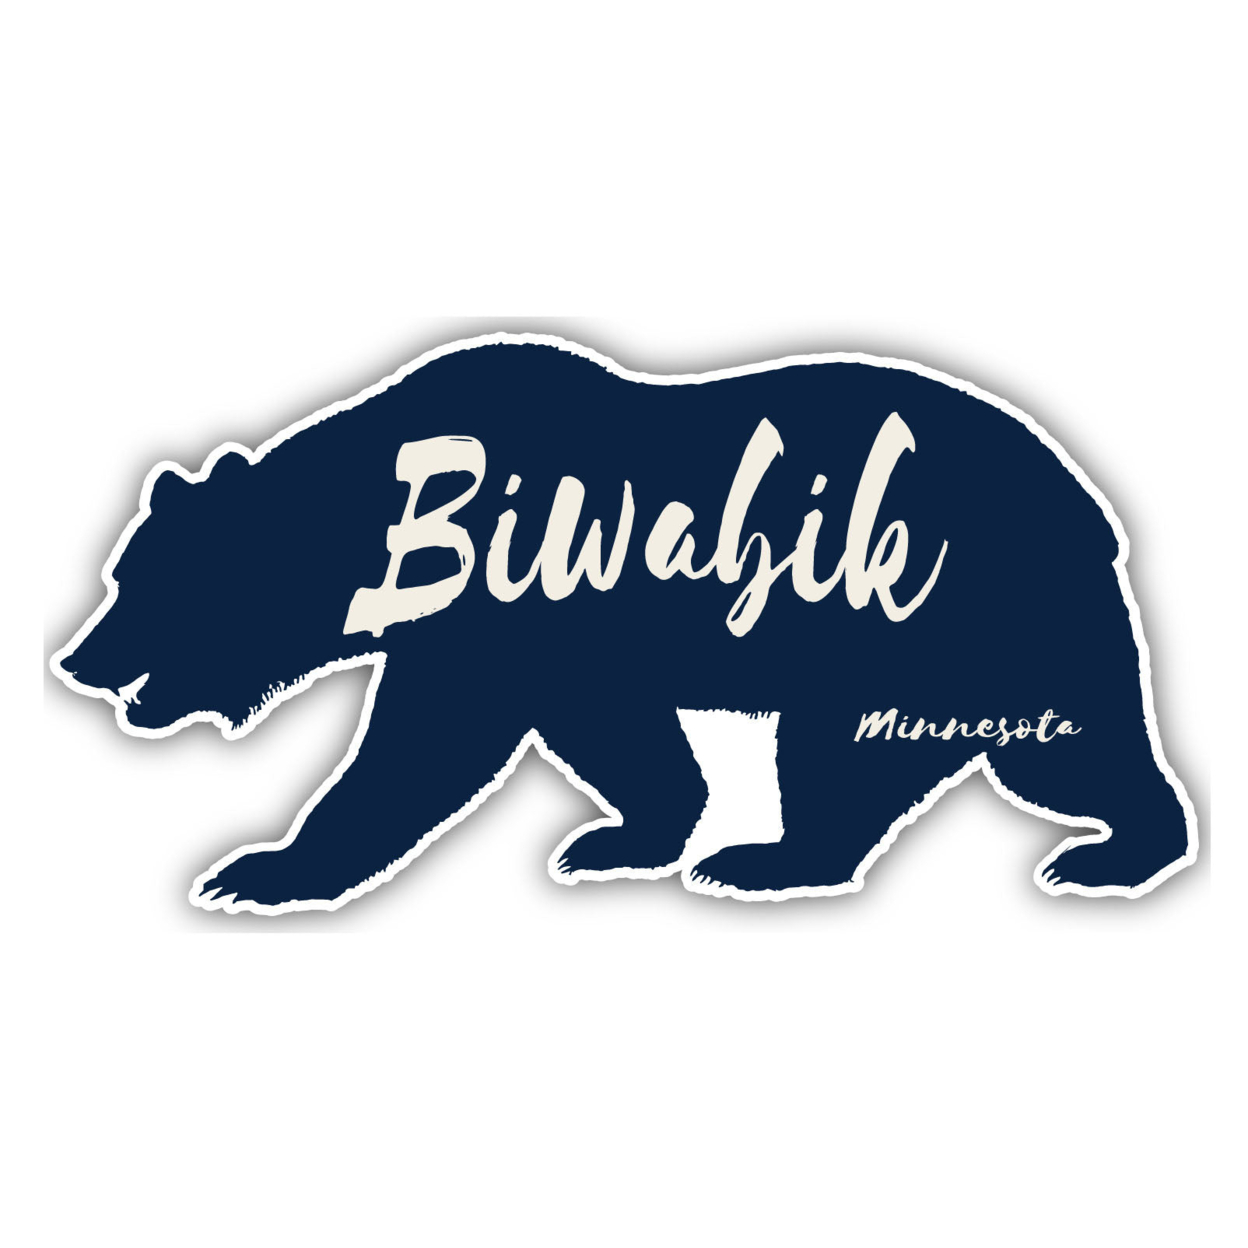 Biwabik Minnesota Souvenir Decorative Stickers (Choose Theme And Size) - Single Unit, 8-Inch, Bear